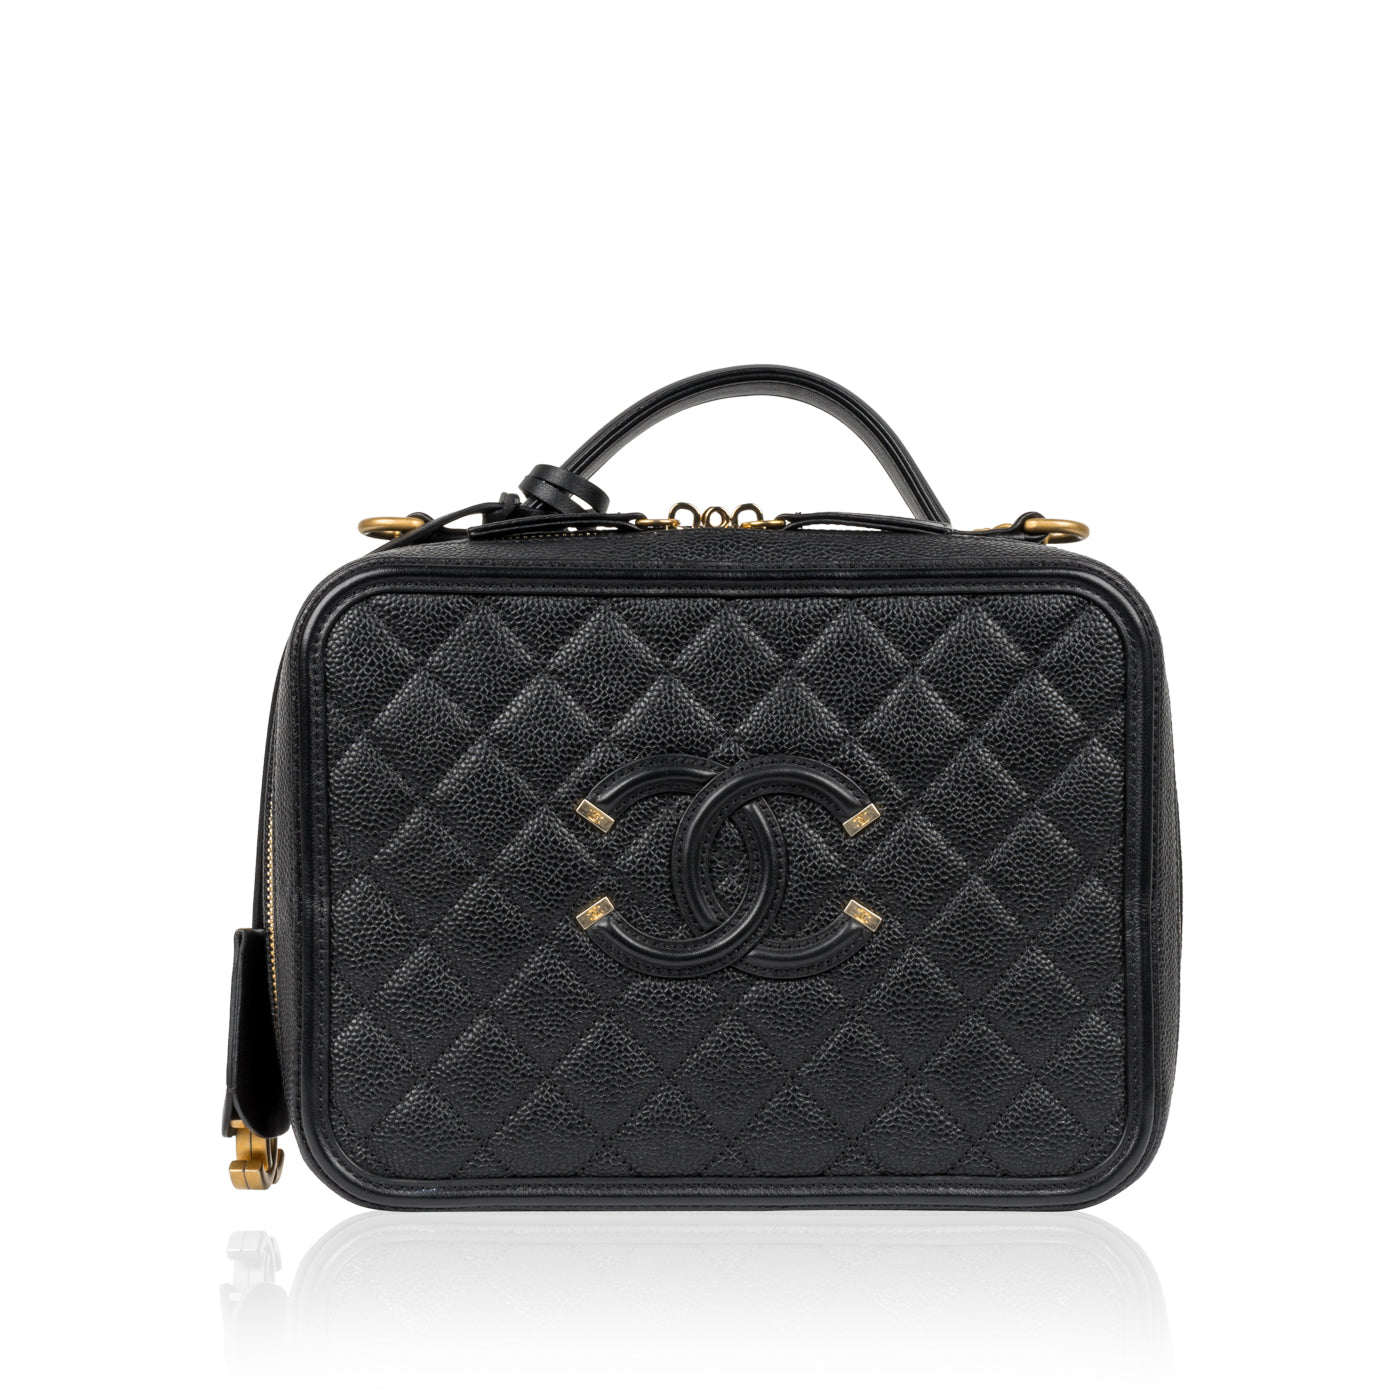 Chanel - Large CC Filigree Vanity Case - Black - Pre-Loved